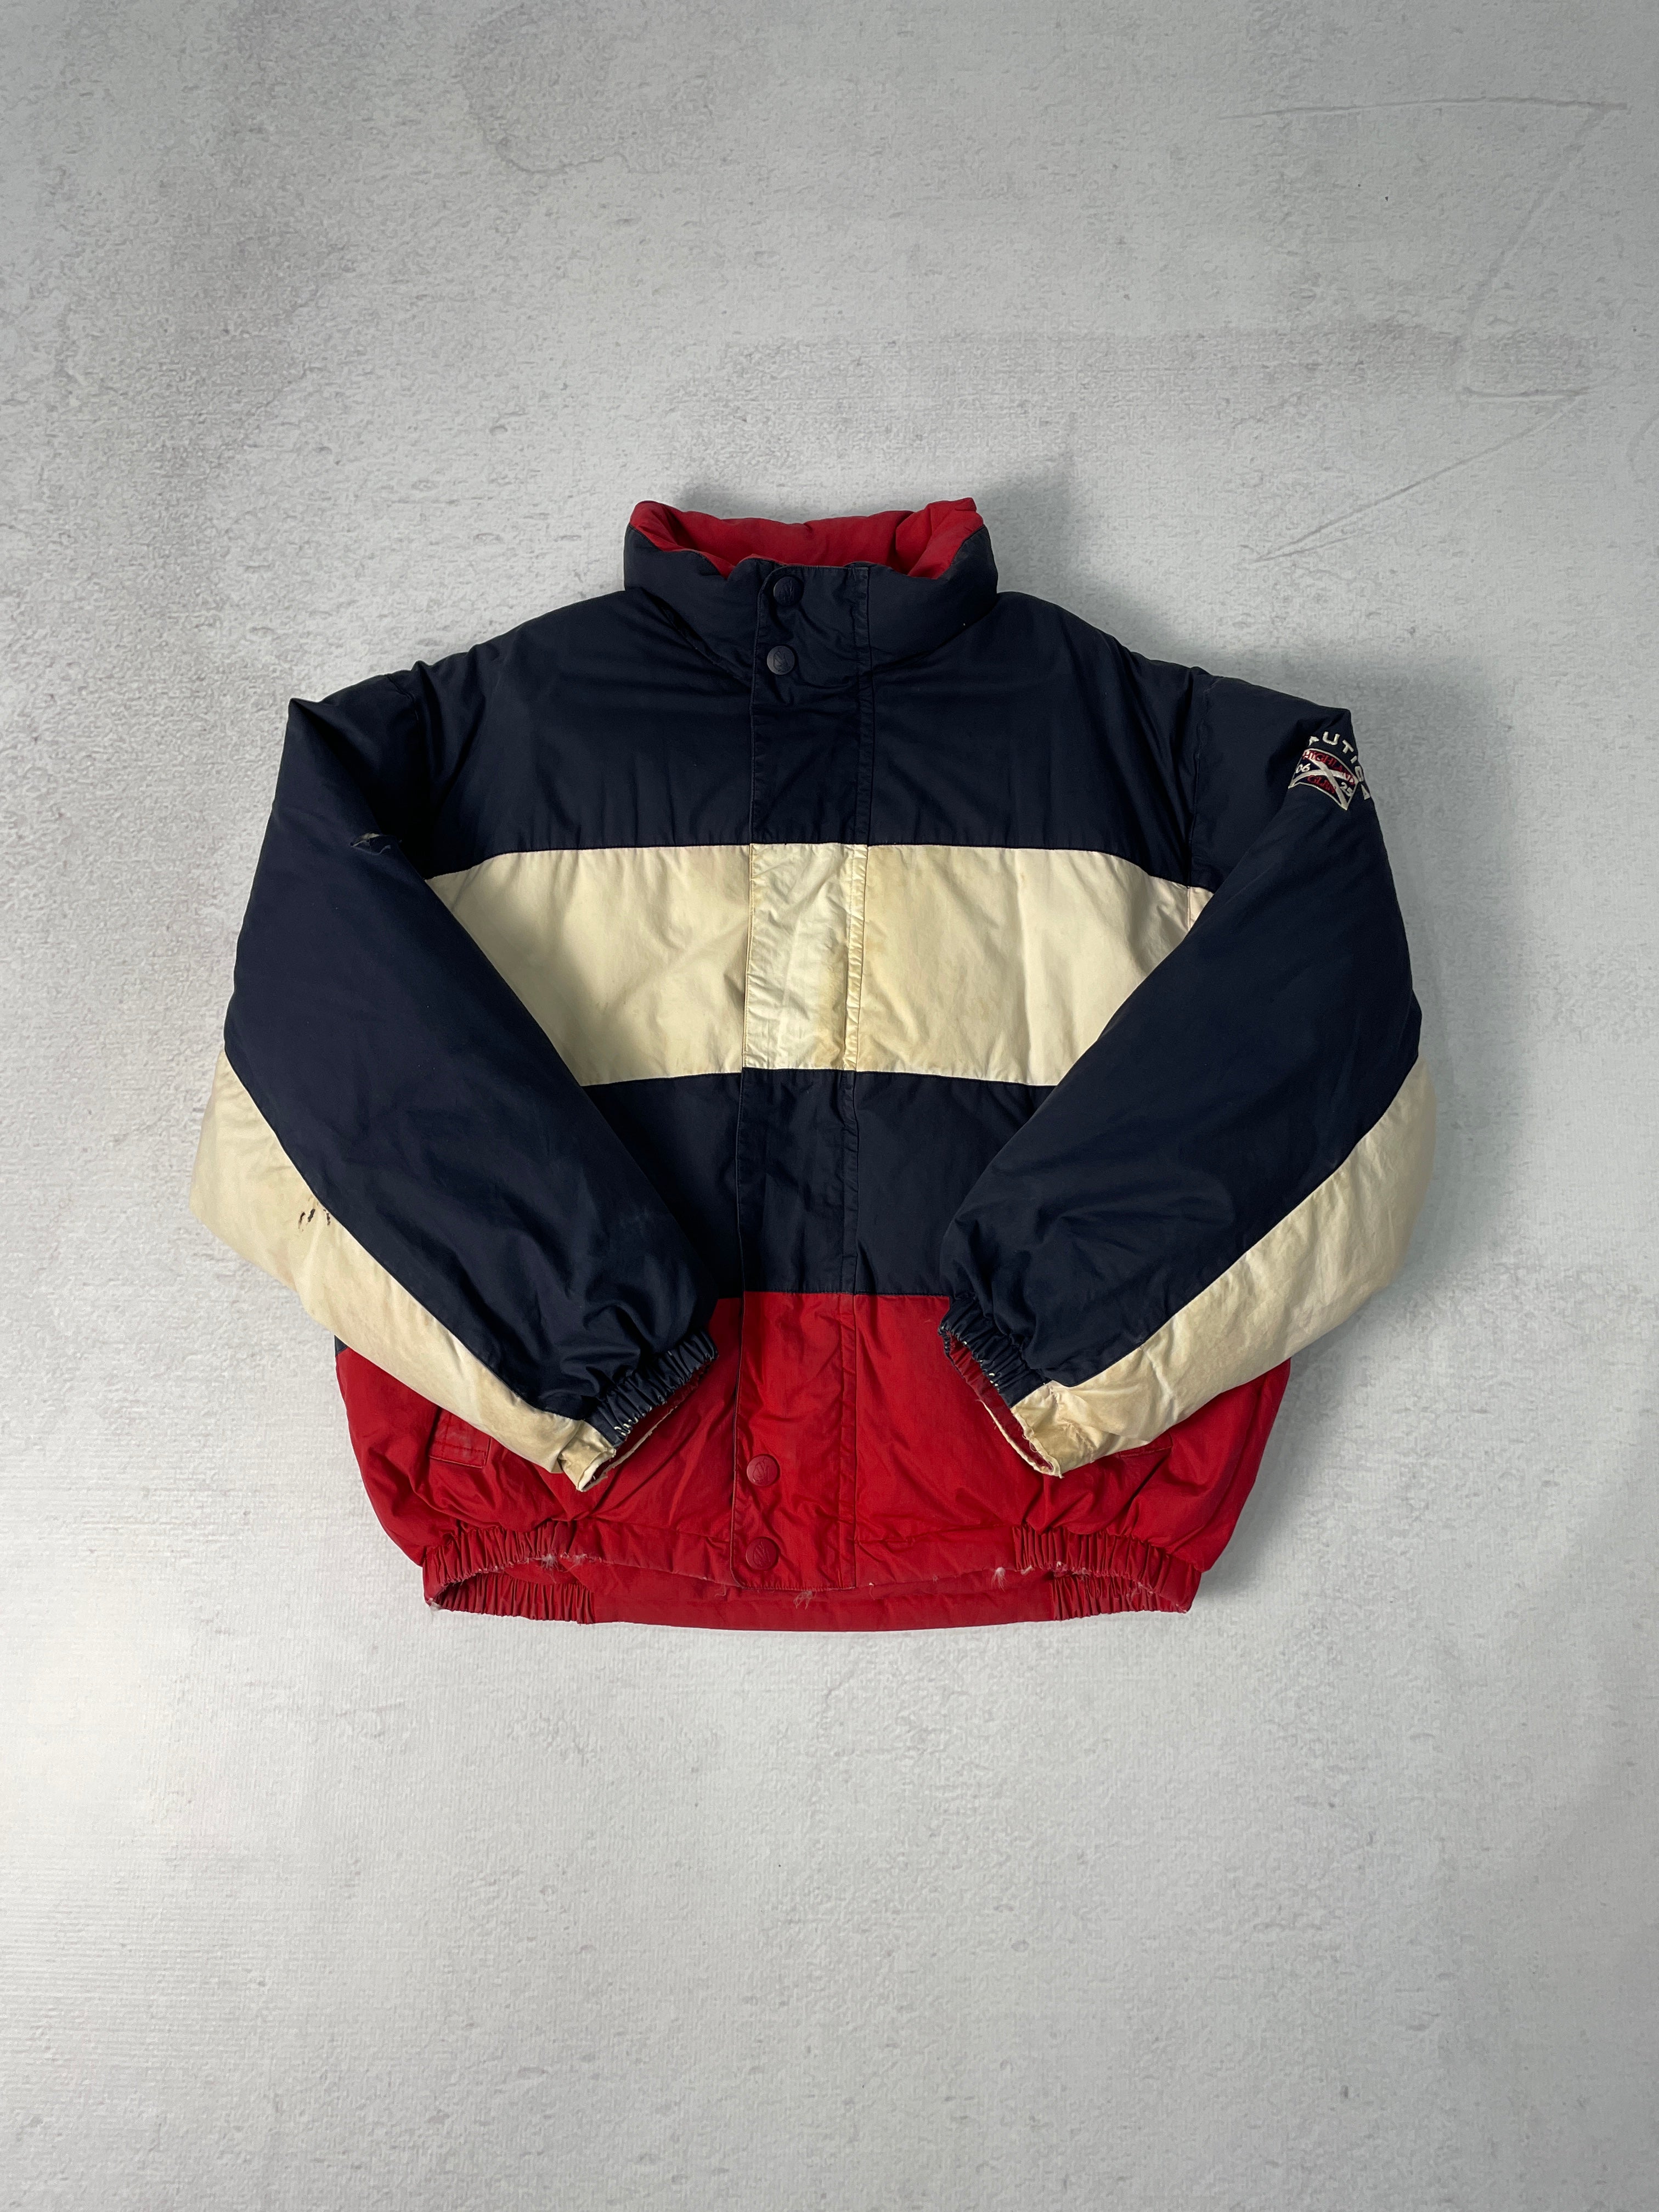 Vintage Nautica Reversible Insulated Jacket - Men's Large